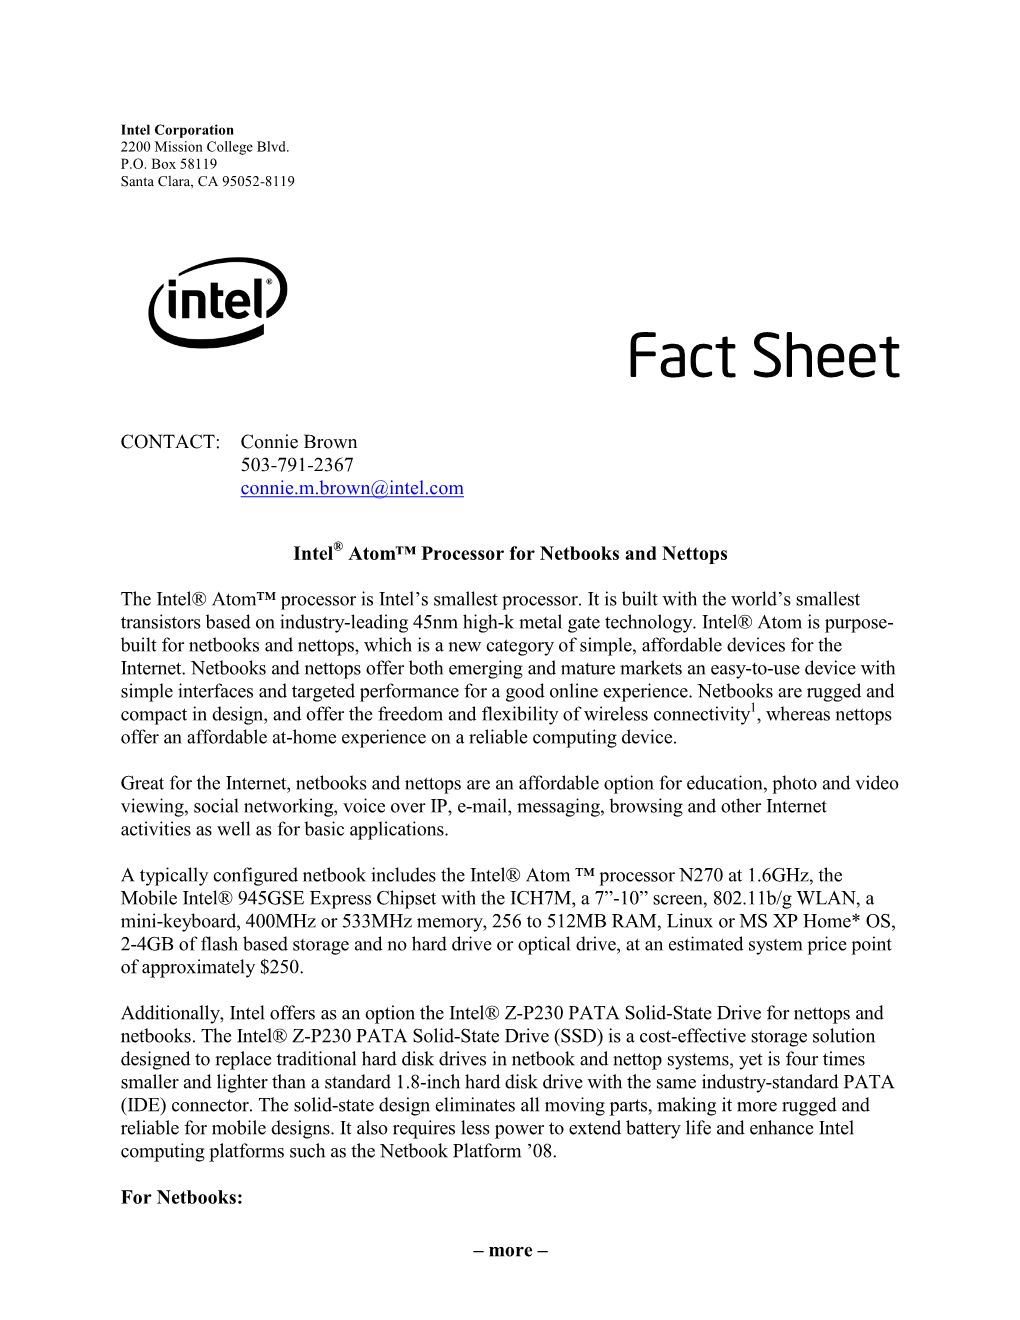 Netbooks and Nettops Factsheet